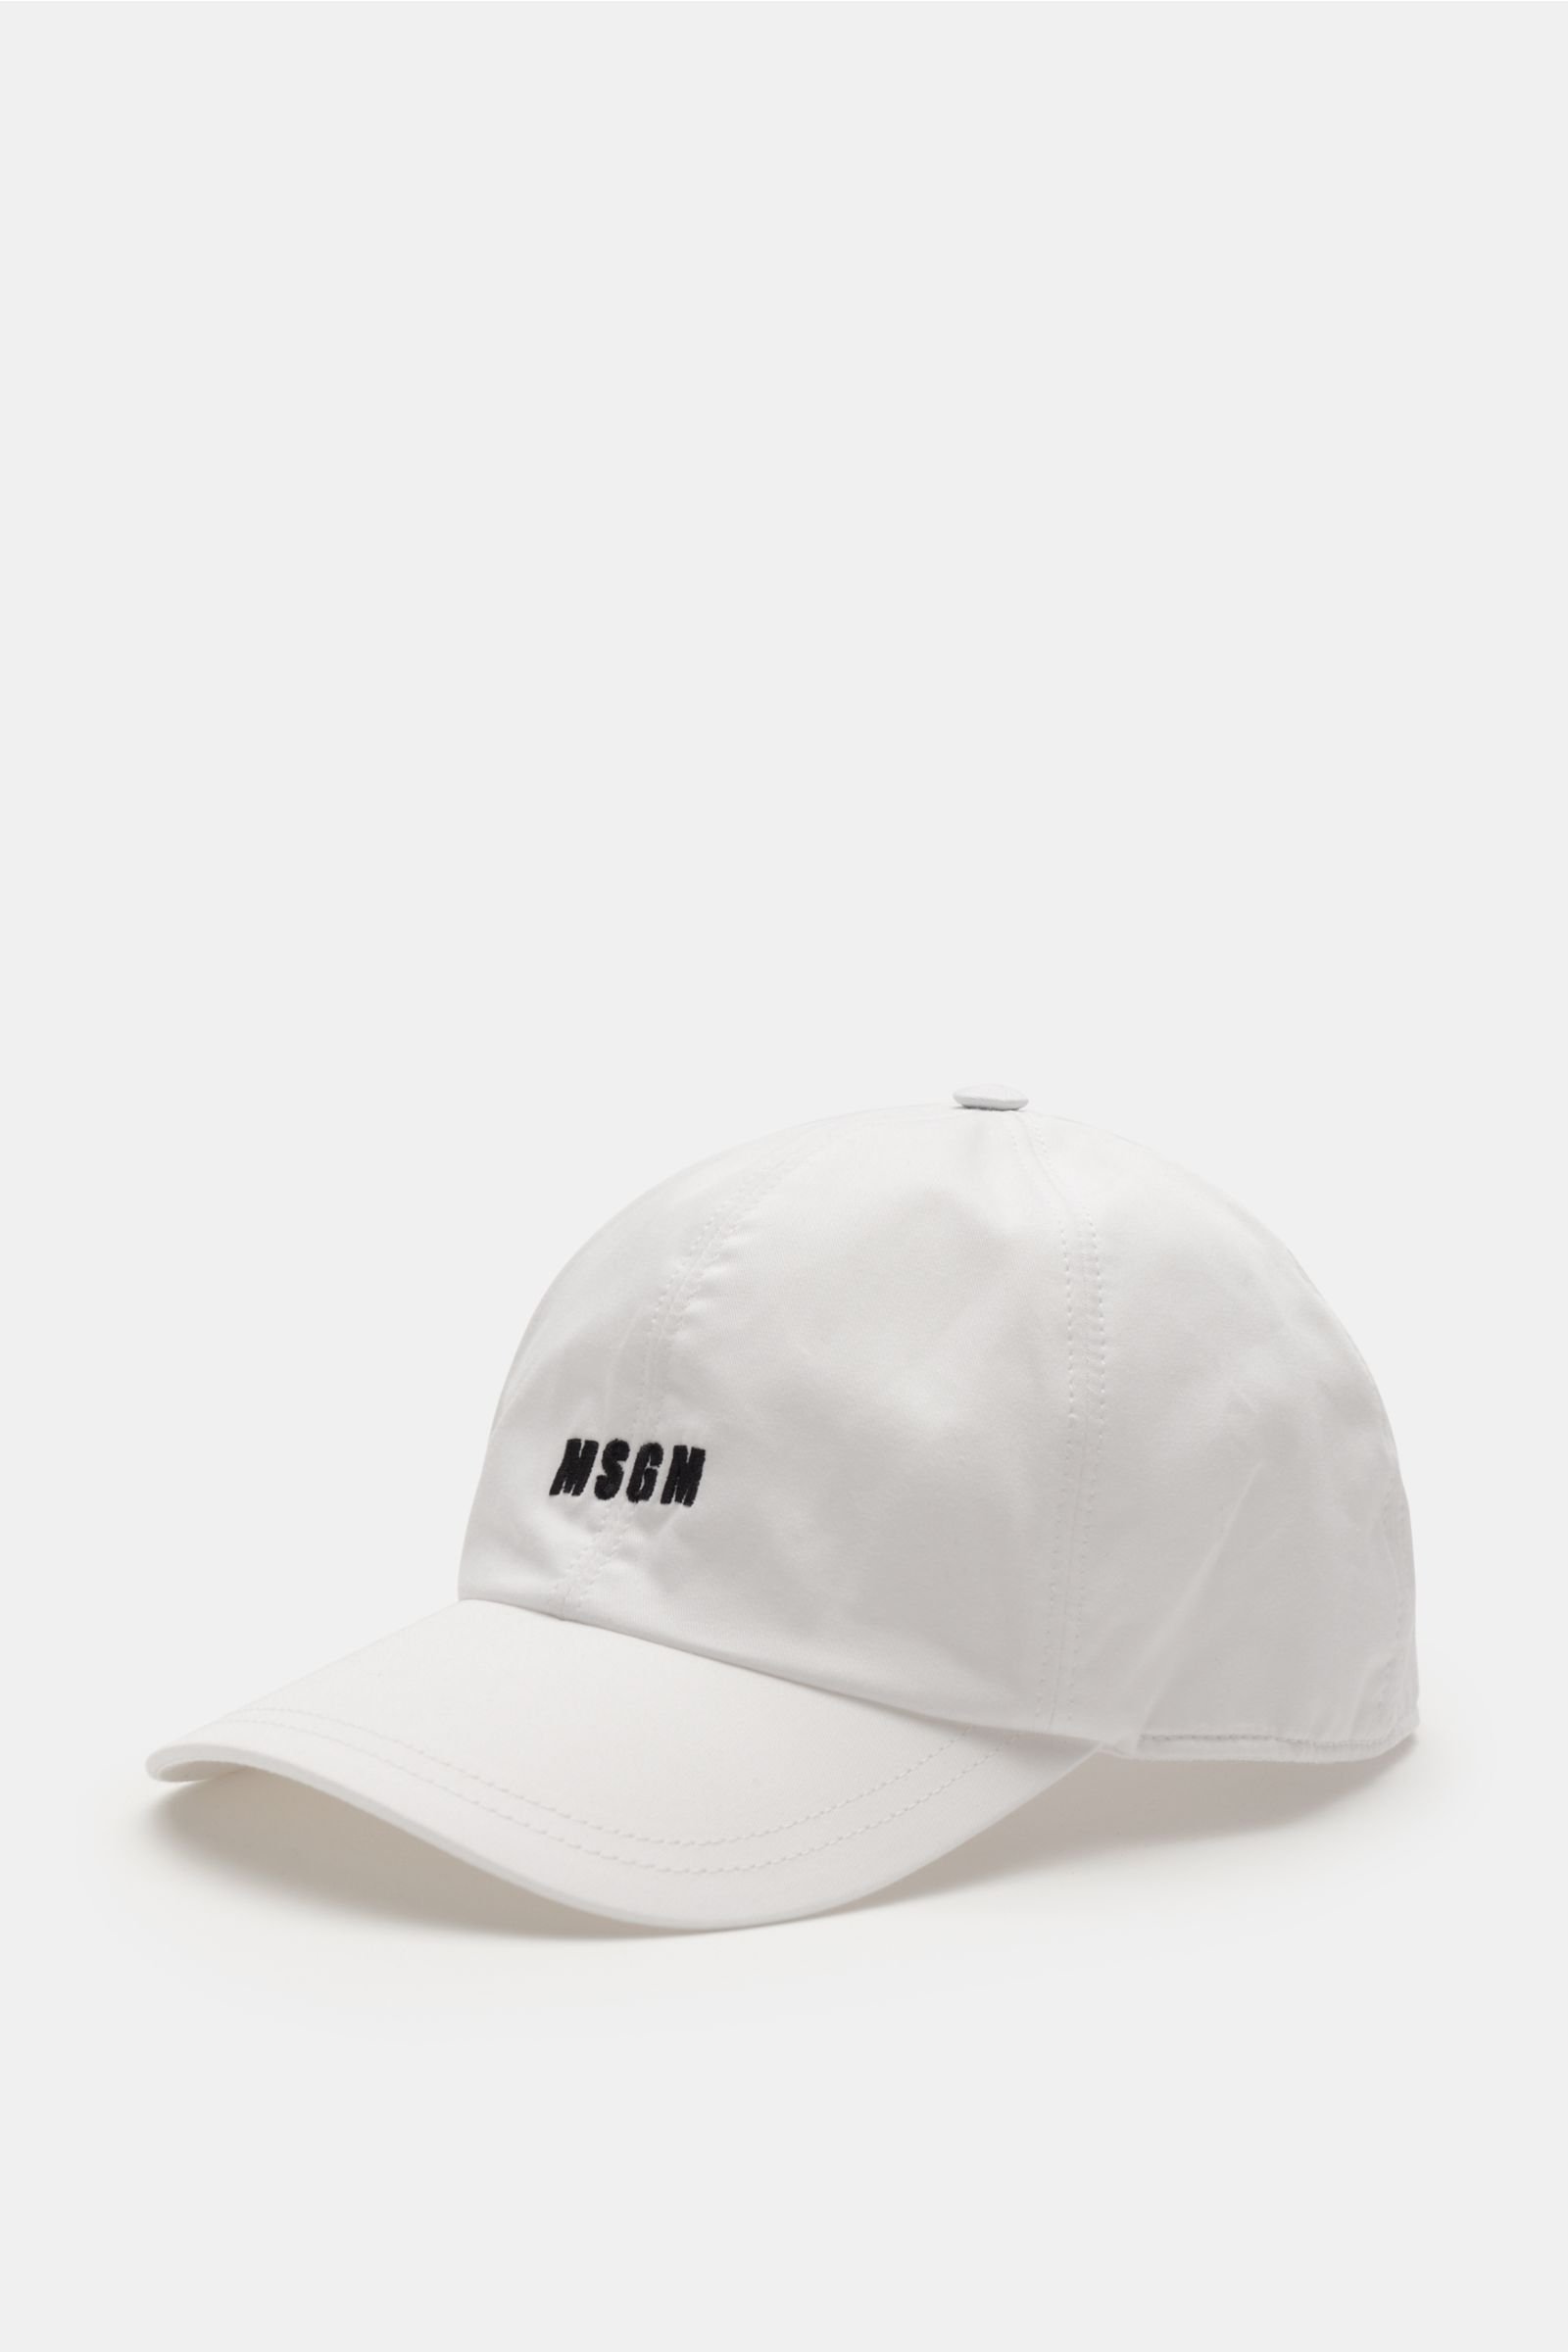 Baseball cap white